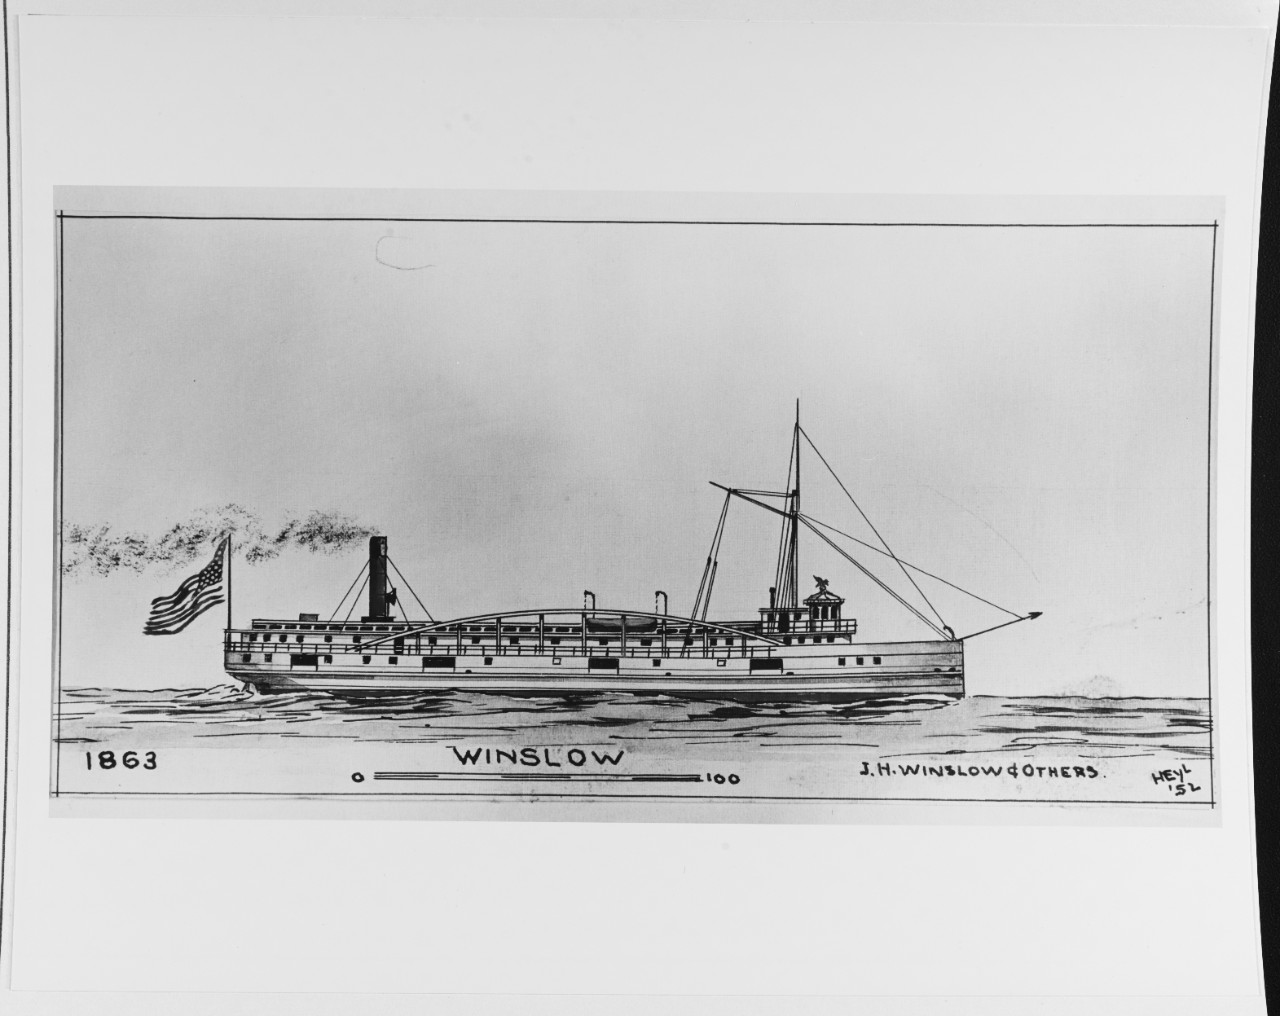 WINSLOW (American Merchant Steamer, 1863-91)